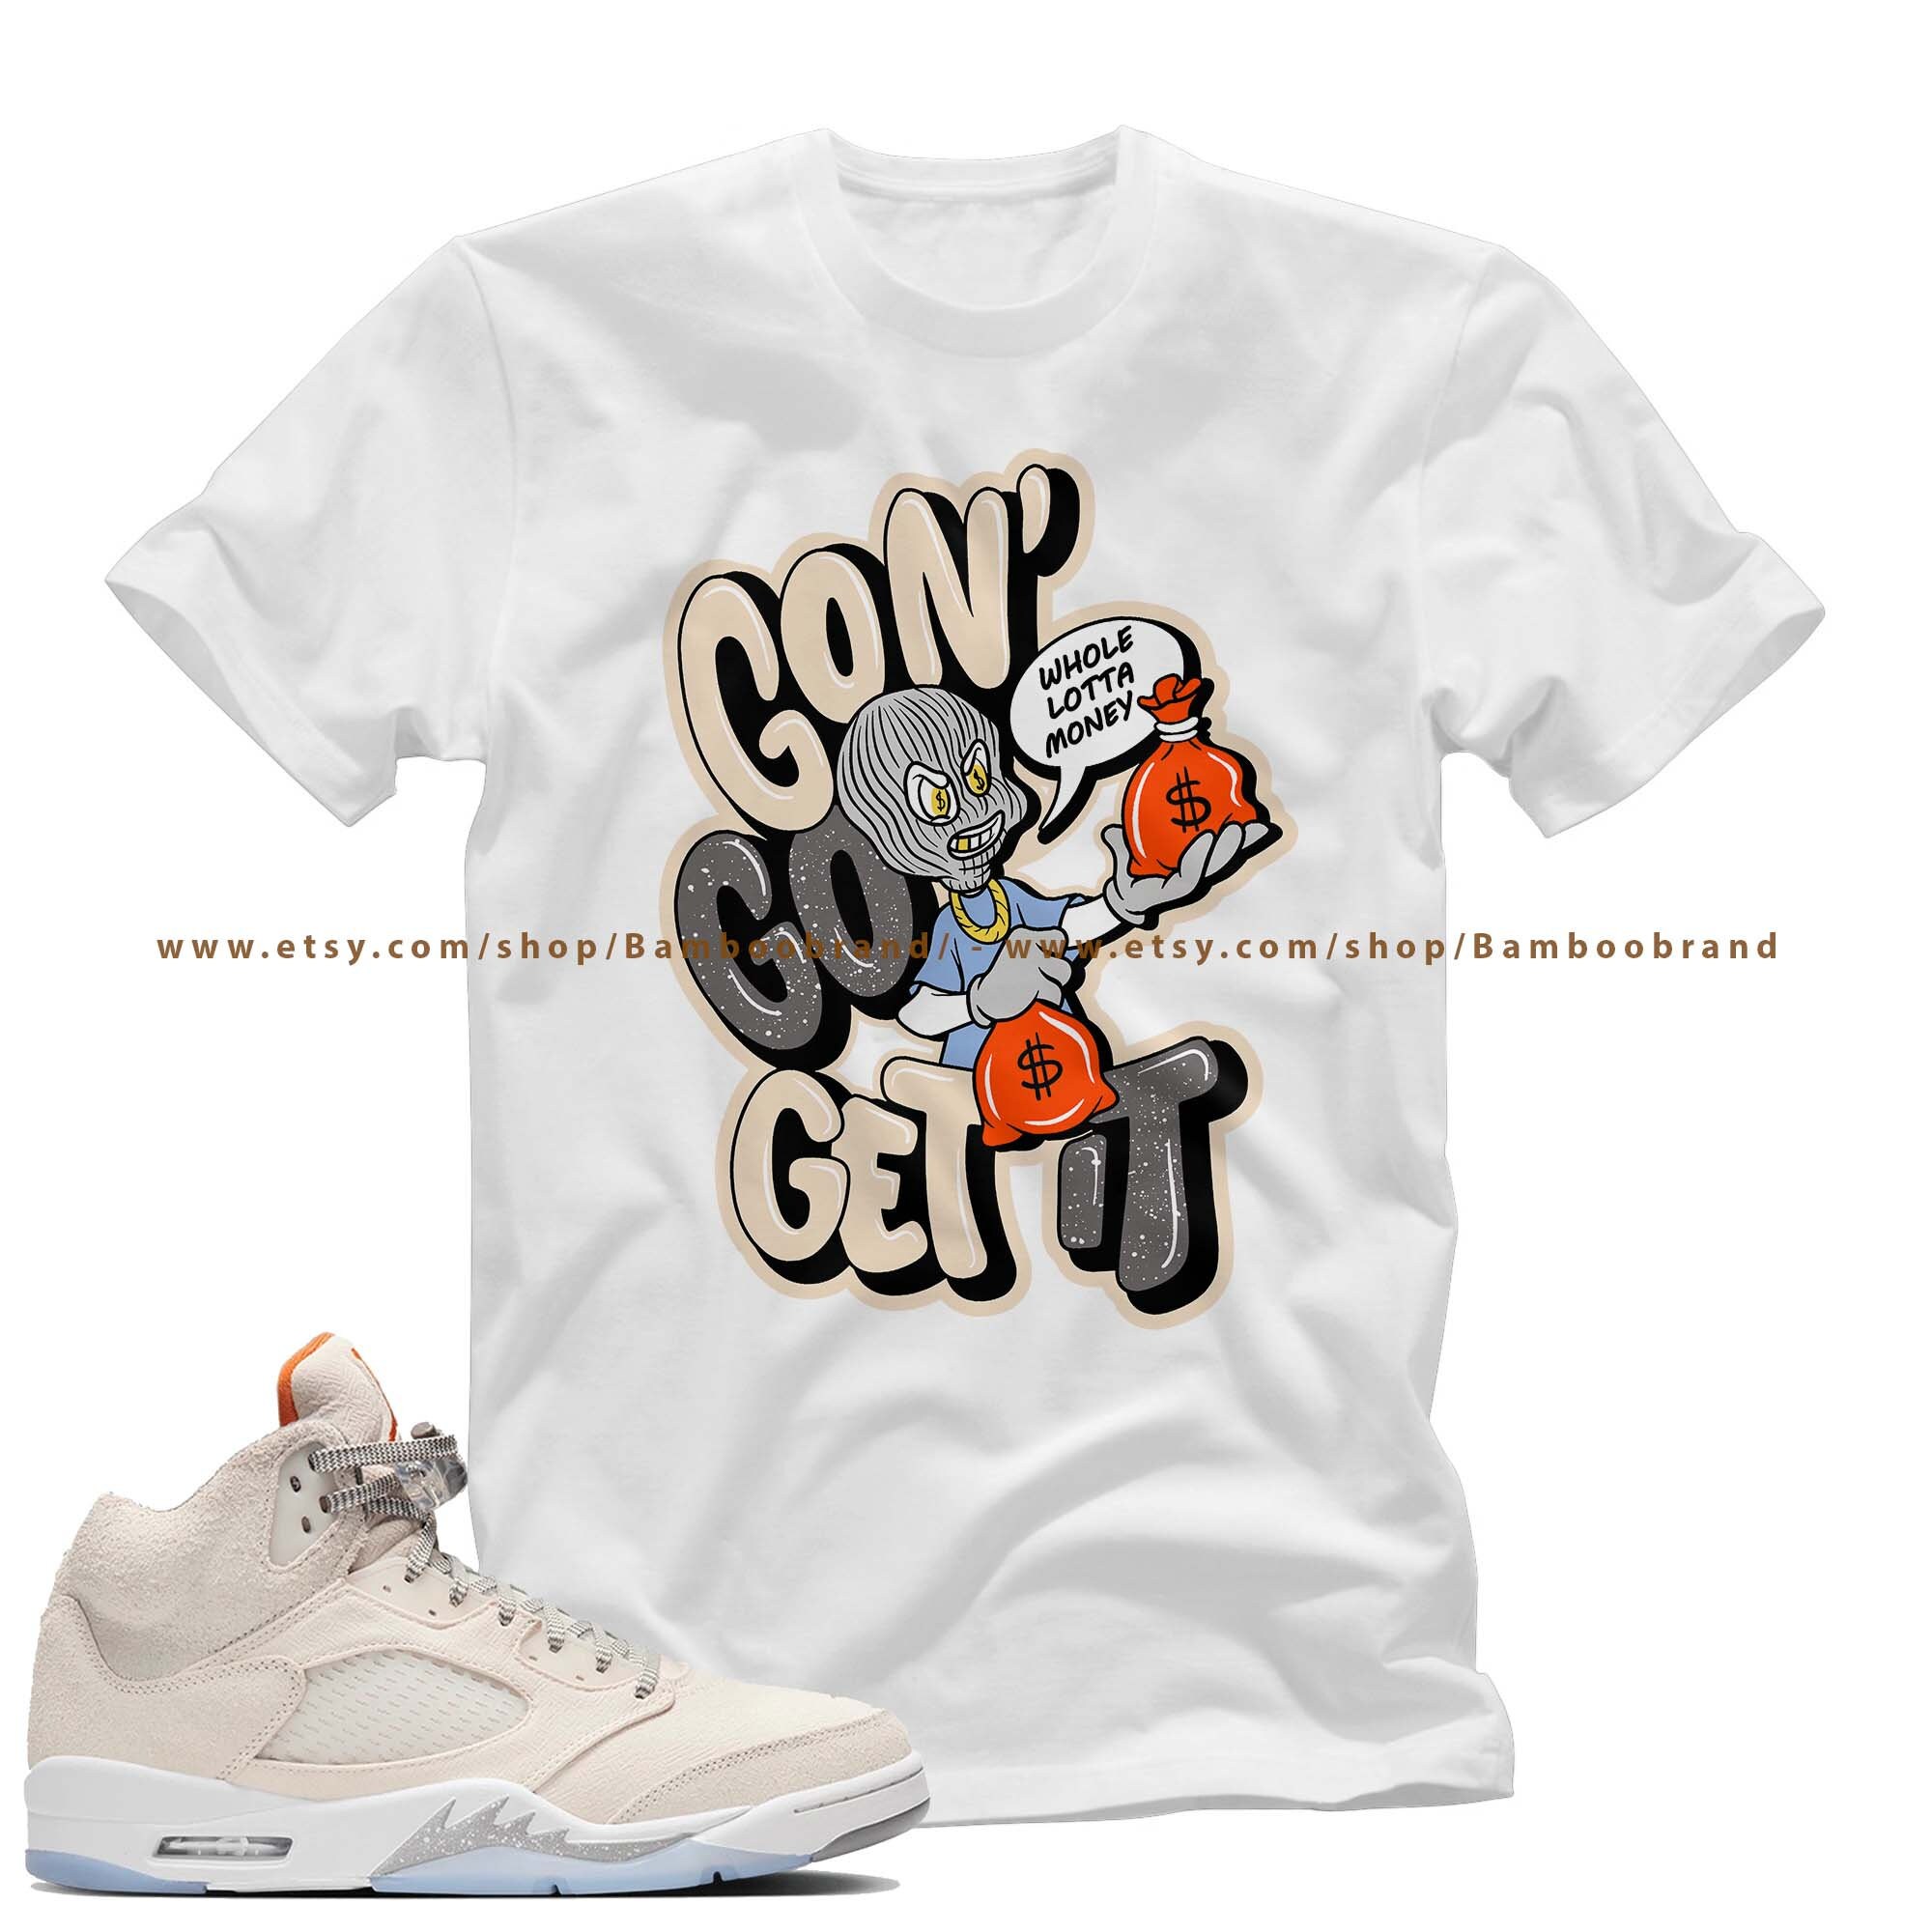 Jordan 5 Craft Shirt | Get It Unisex T-shirt to Match Air Jordan 5 Retro Craft Light Orewood Brown Sneakers | AJ 5 Retro Craft 5s Tee Outfit